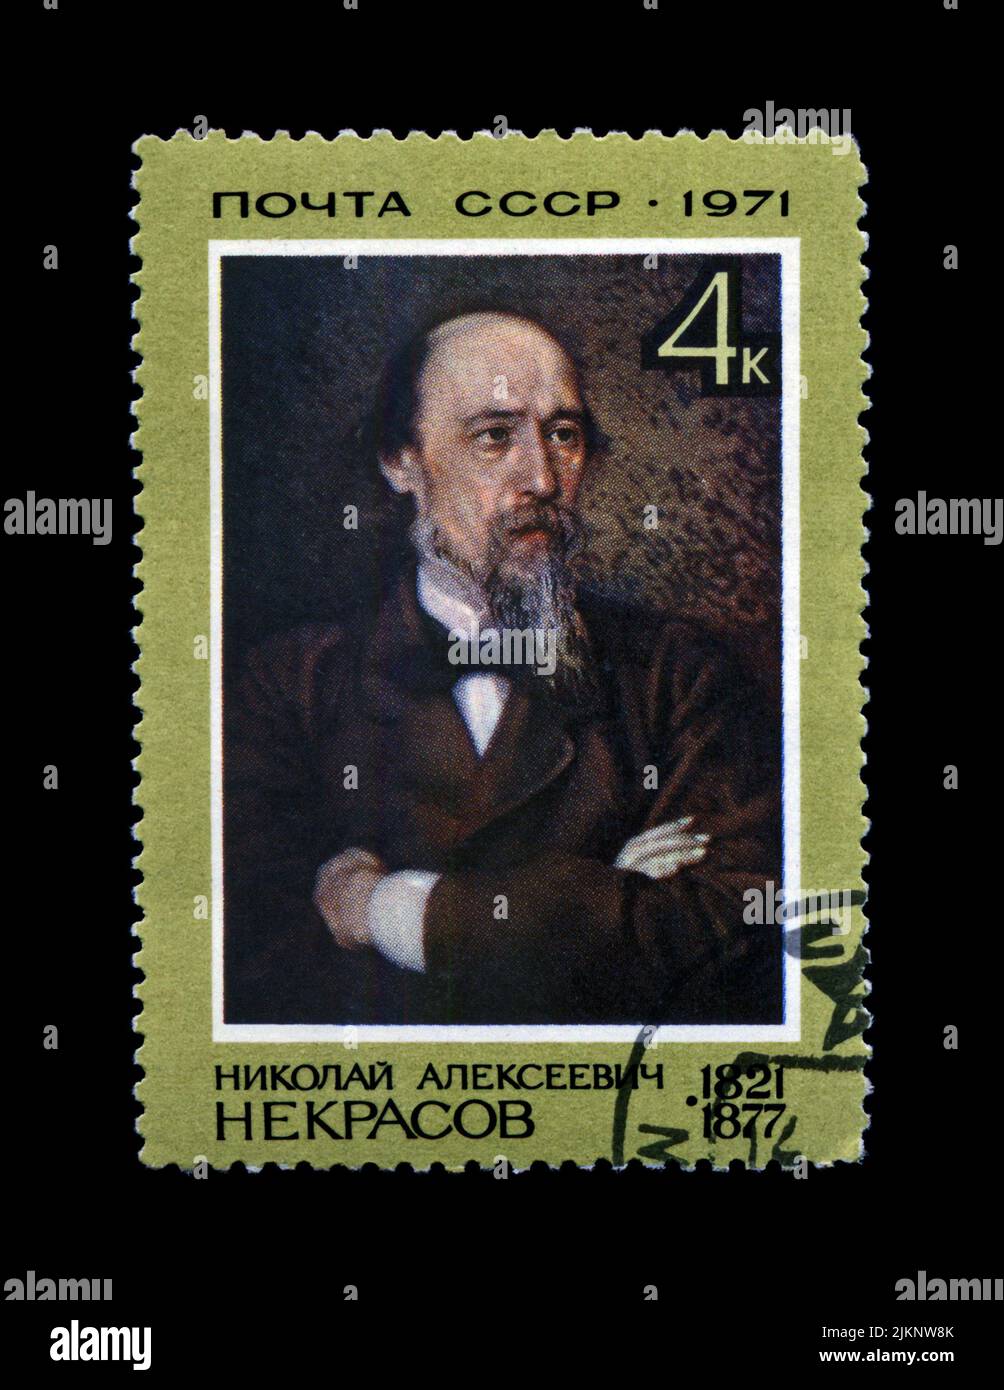 Nikolai Nekrasov (1821-1877), famoso poeta russo, circa 1971. vintage cancellato timbro postale stampato in URSS isolato su sfondo nero. Foto Stock